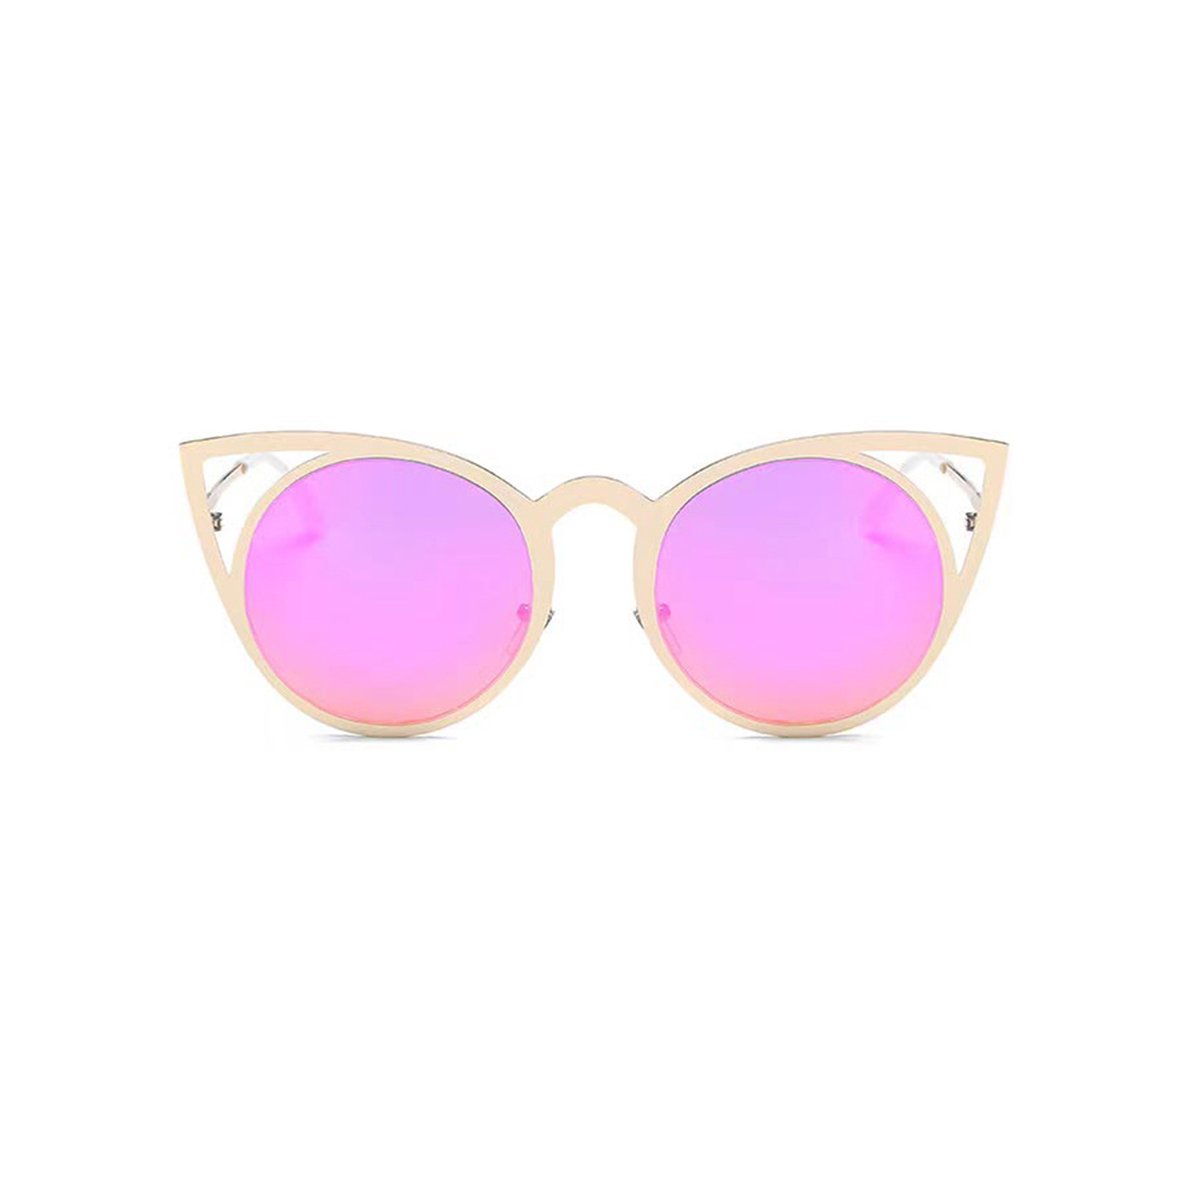 Freaky Glasses - Zonnebril rond met kattenoortjes - Festivalbril - Bril - Feest - Glasses - Heren - Dames - Unisex - Kunststof - roze - goud